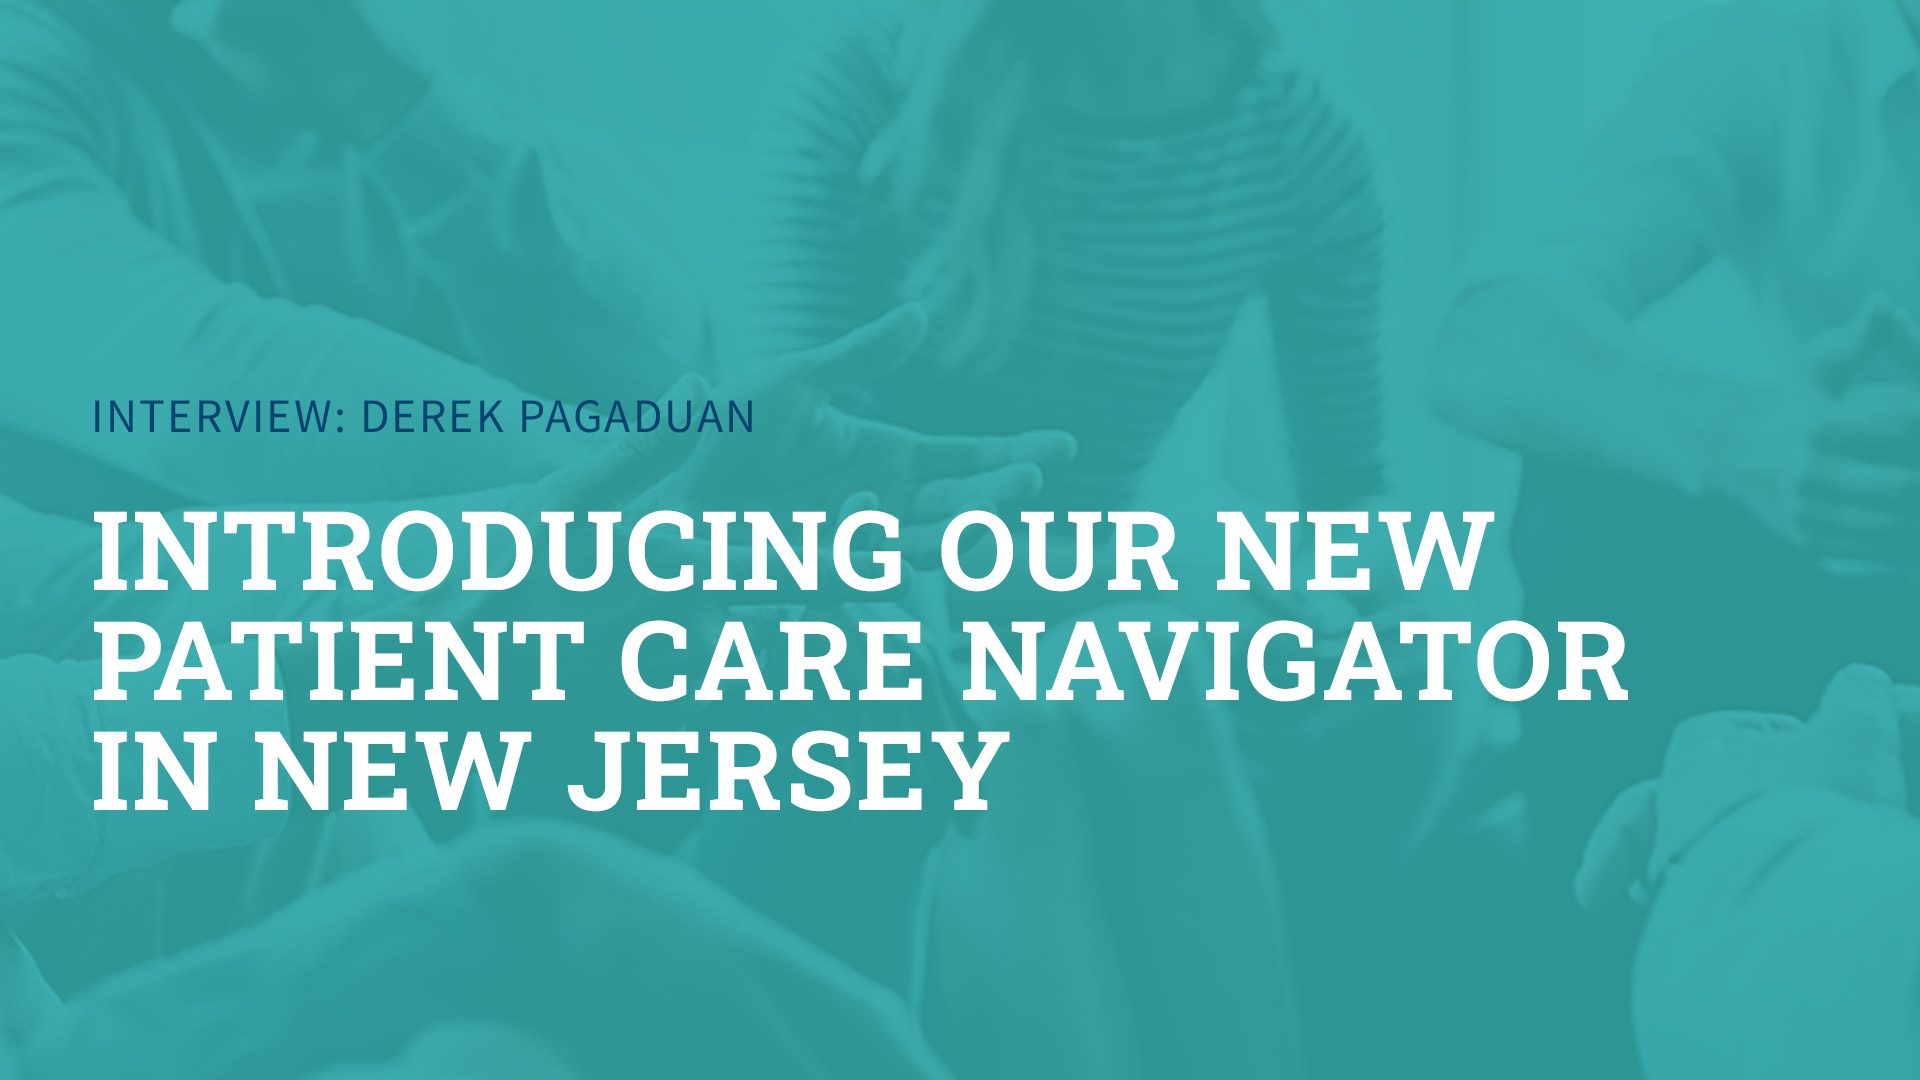 Introducing our new patient care navigator in New Jersey – Derek Pagaduan